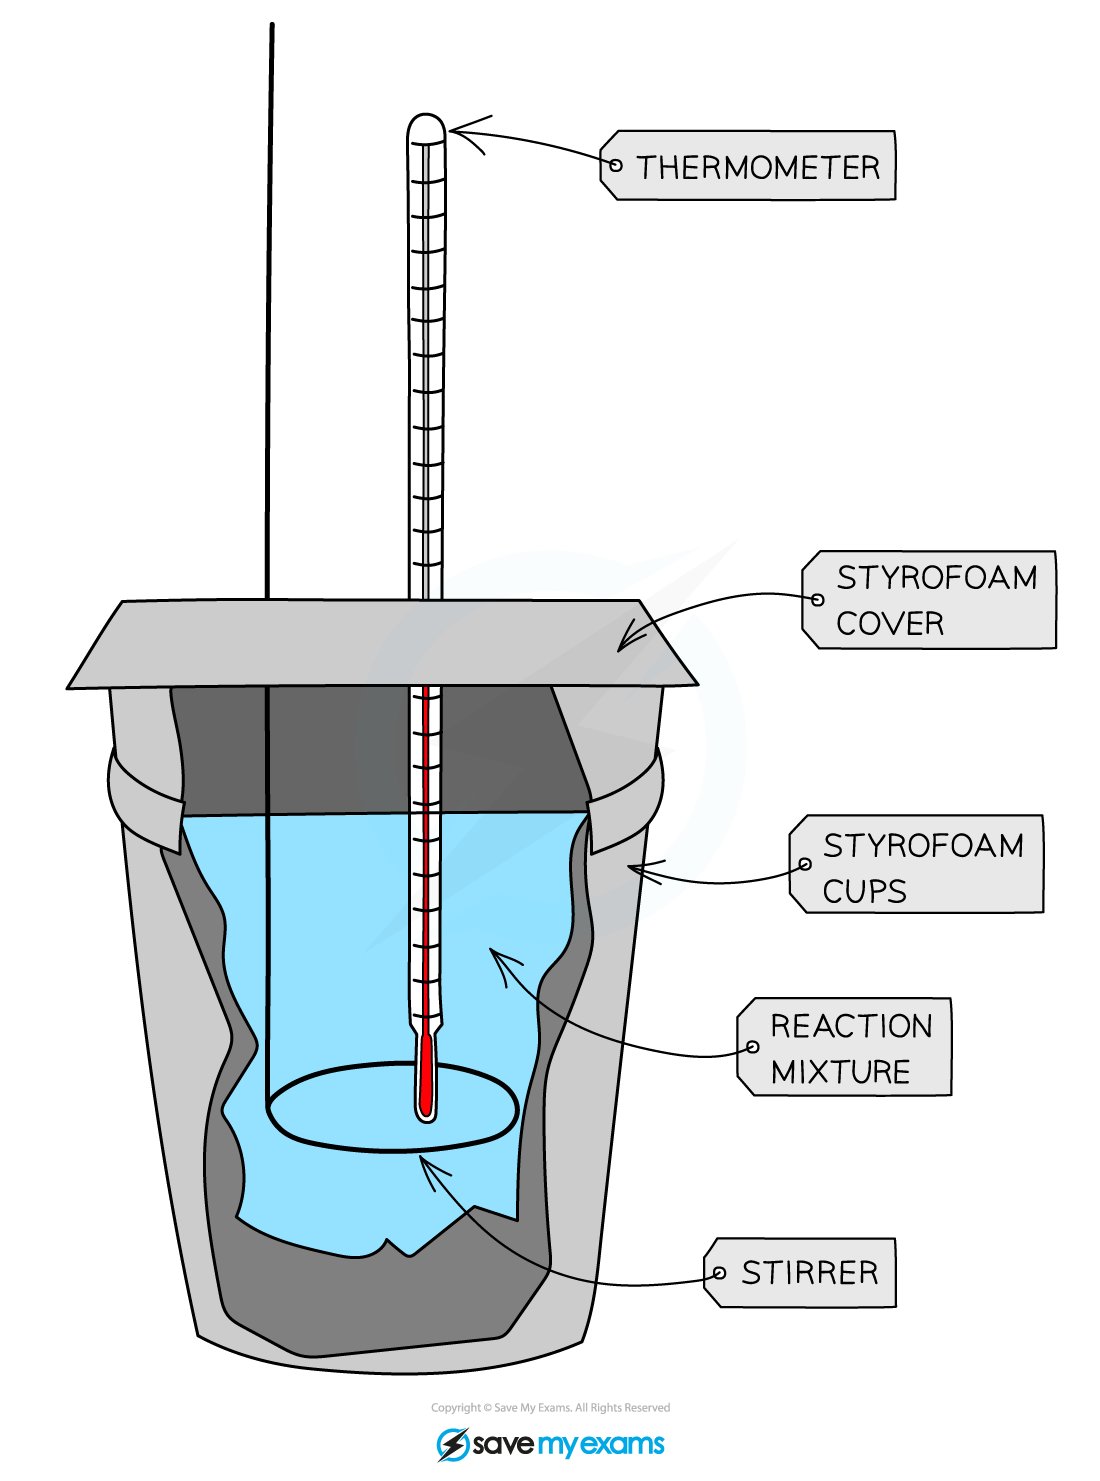 Calorimeter-Styrofoam-Cup